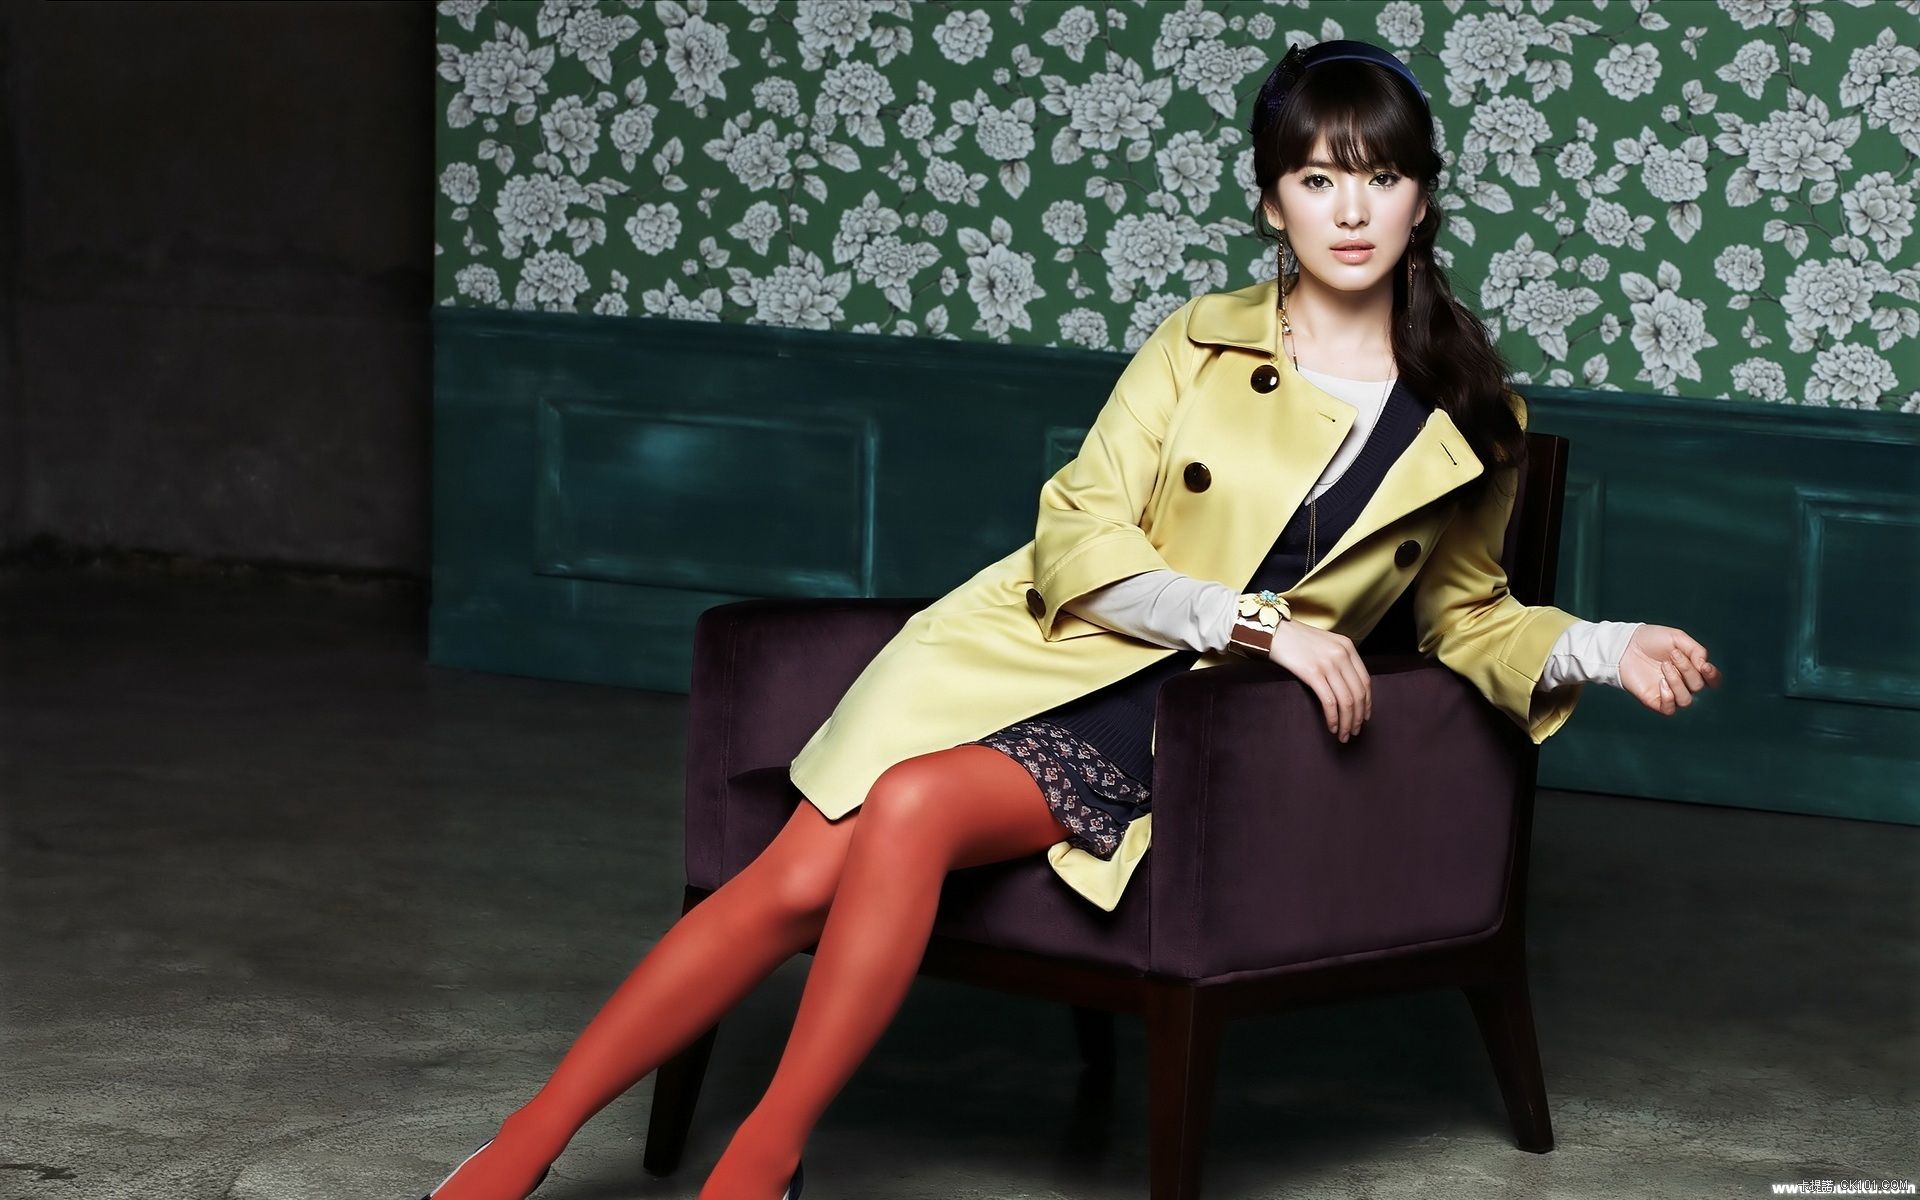 620552 descargar imagen celebridades, canción hye kyo, actriz, coreano: fondos de pantalla y protectores de pantalla gratis